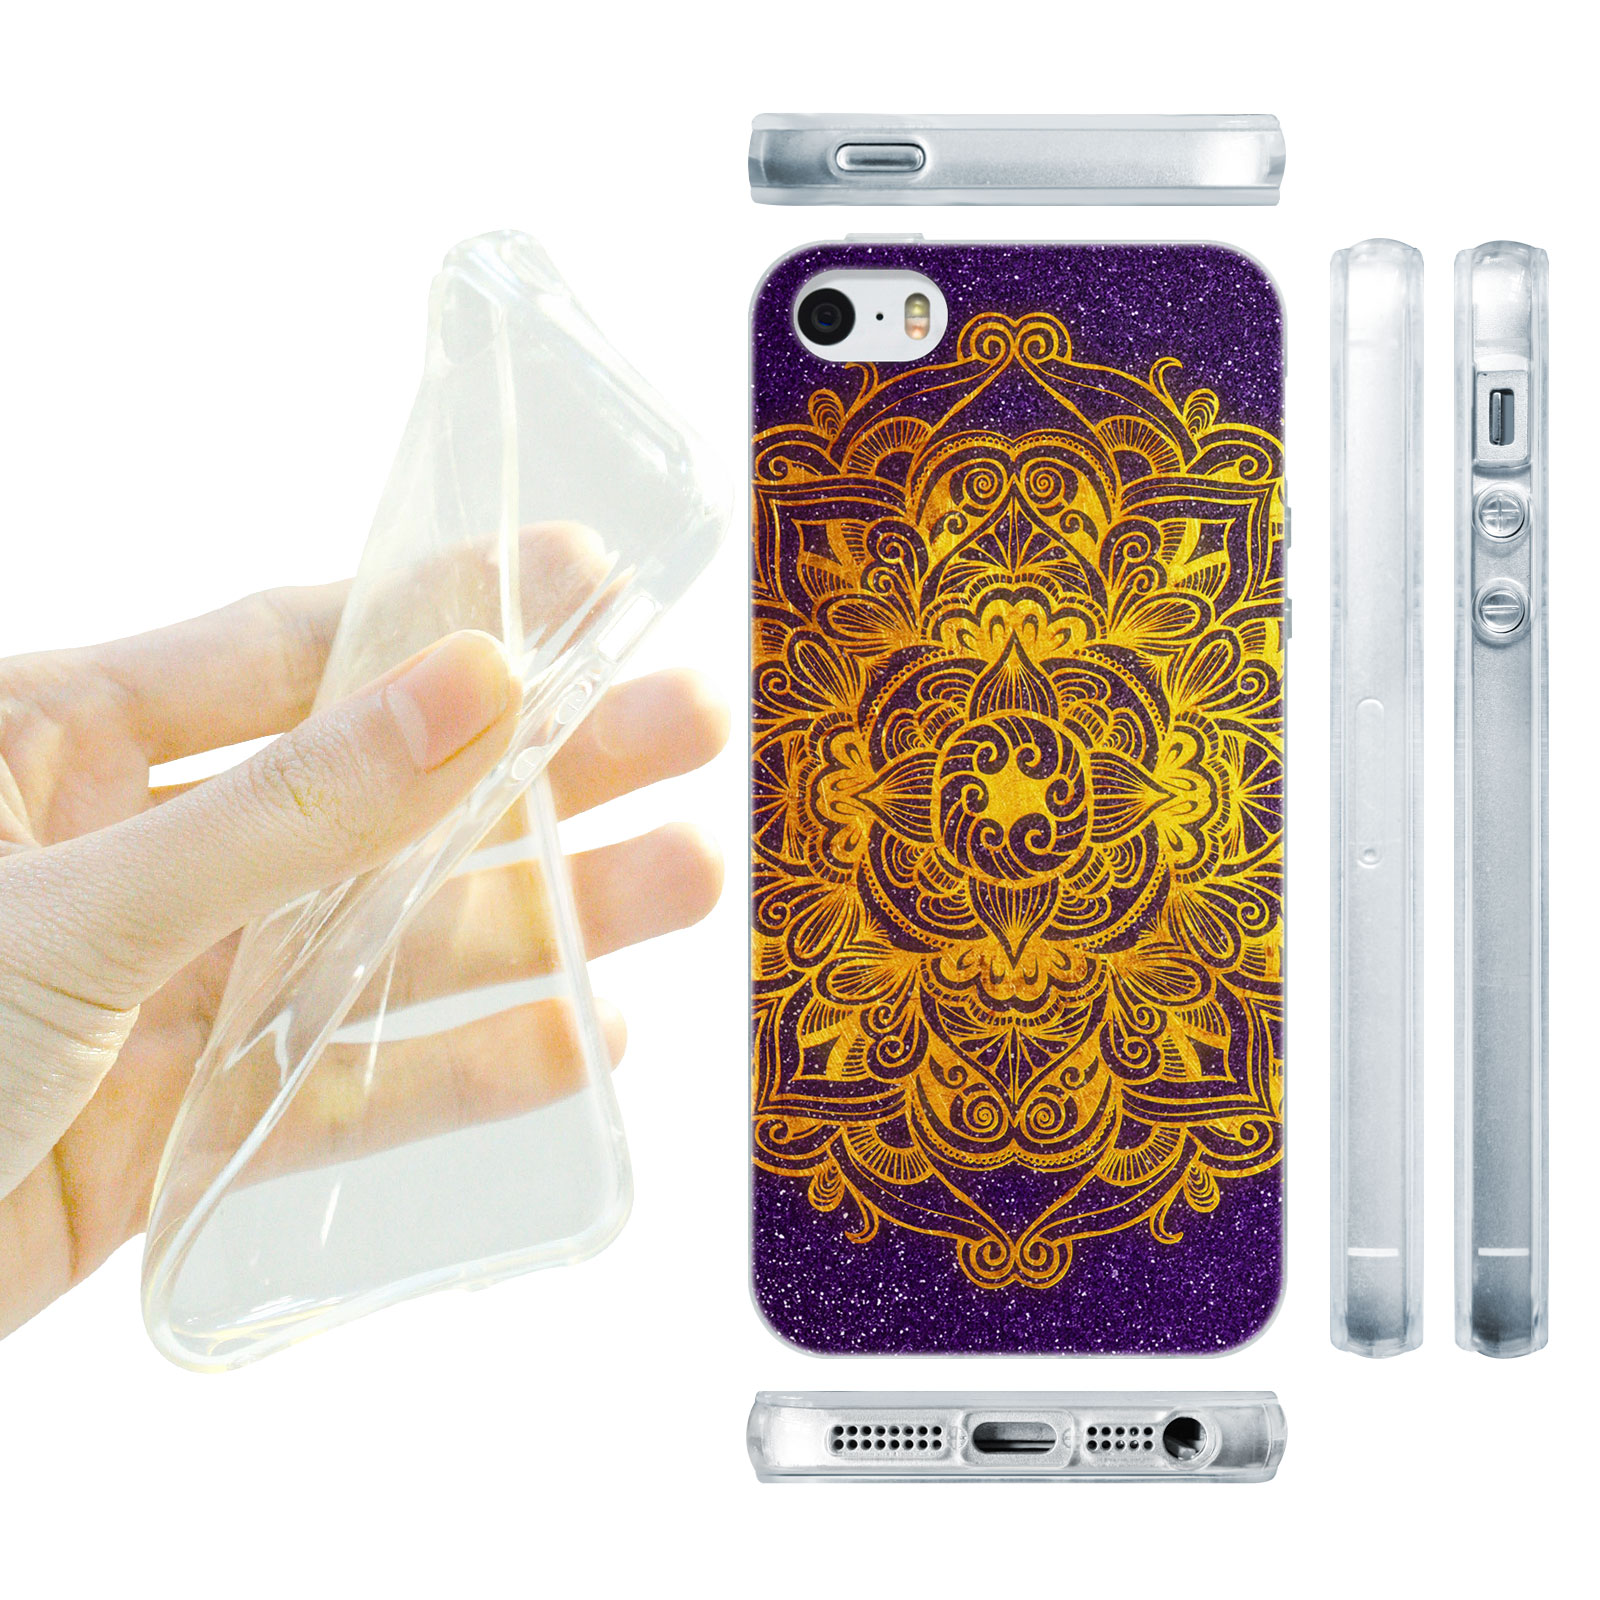 HEAD CASE silikonový obal na mobil Iphone 5/5S  barevná mandala fialová a žlutá